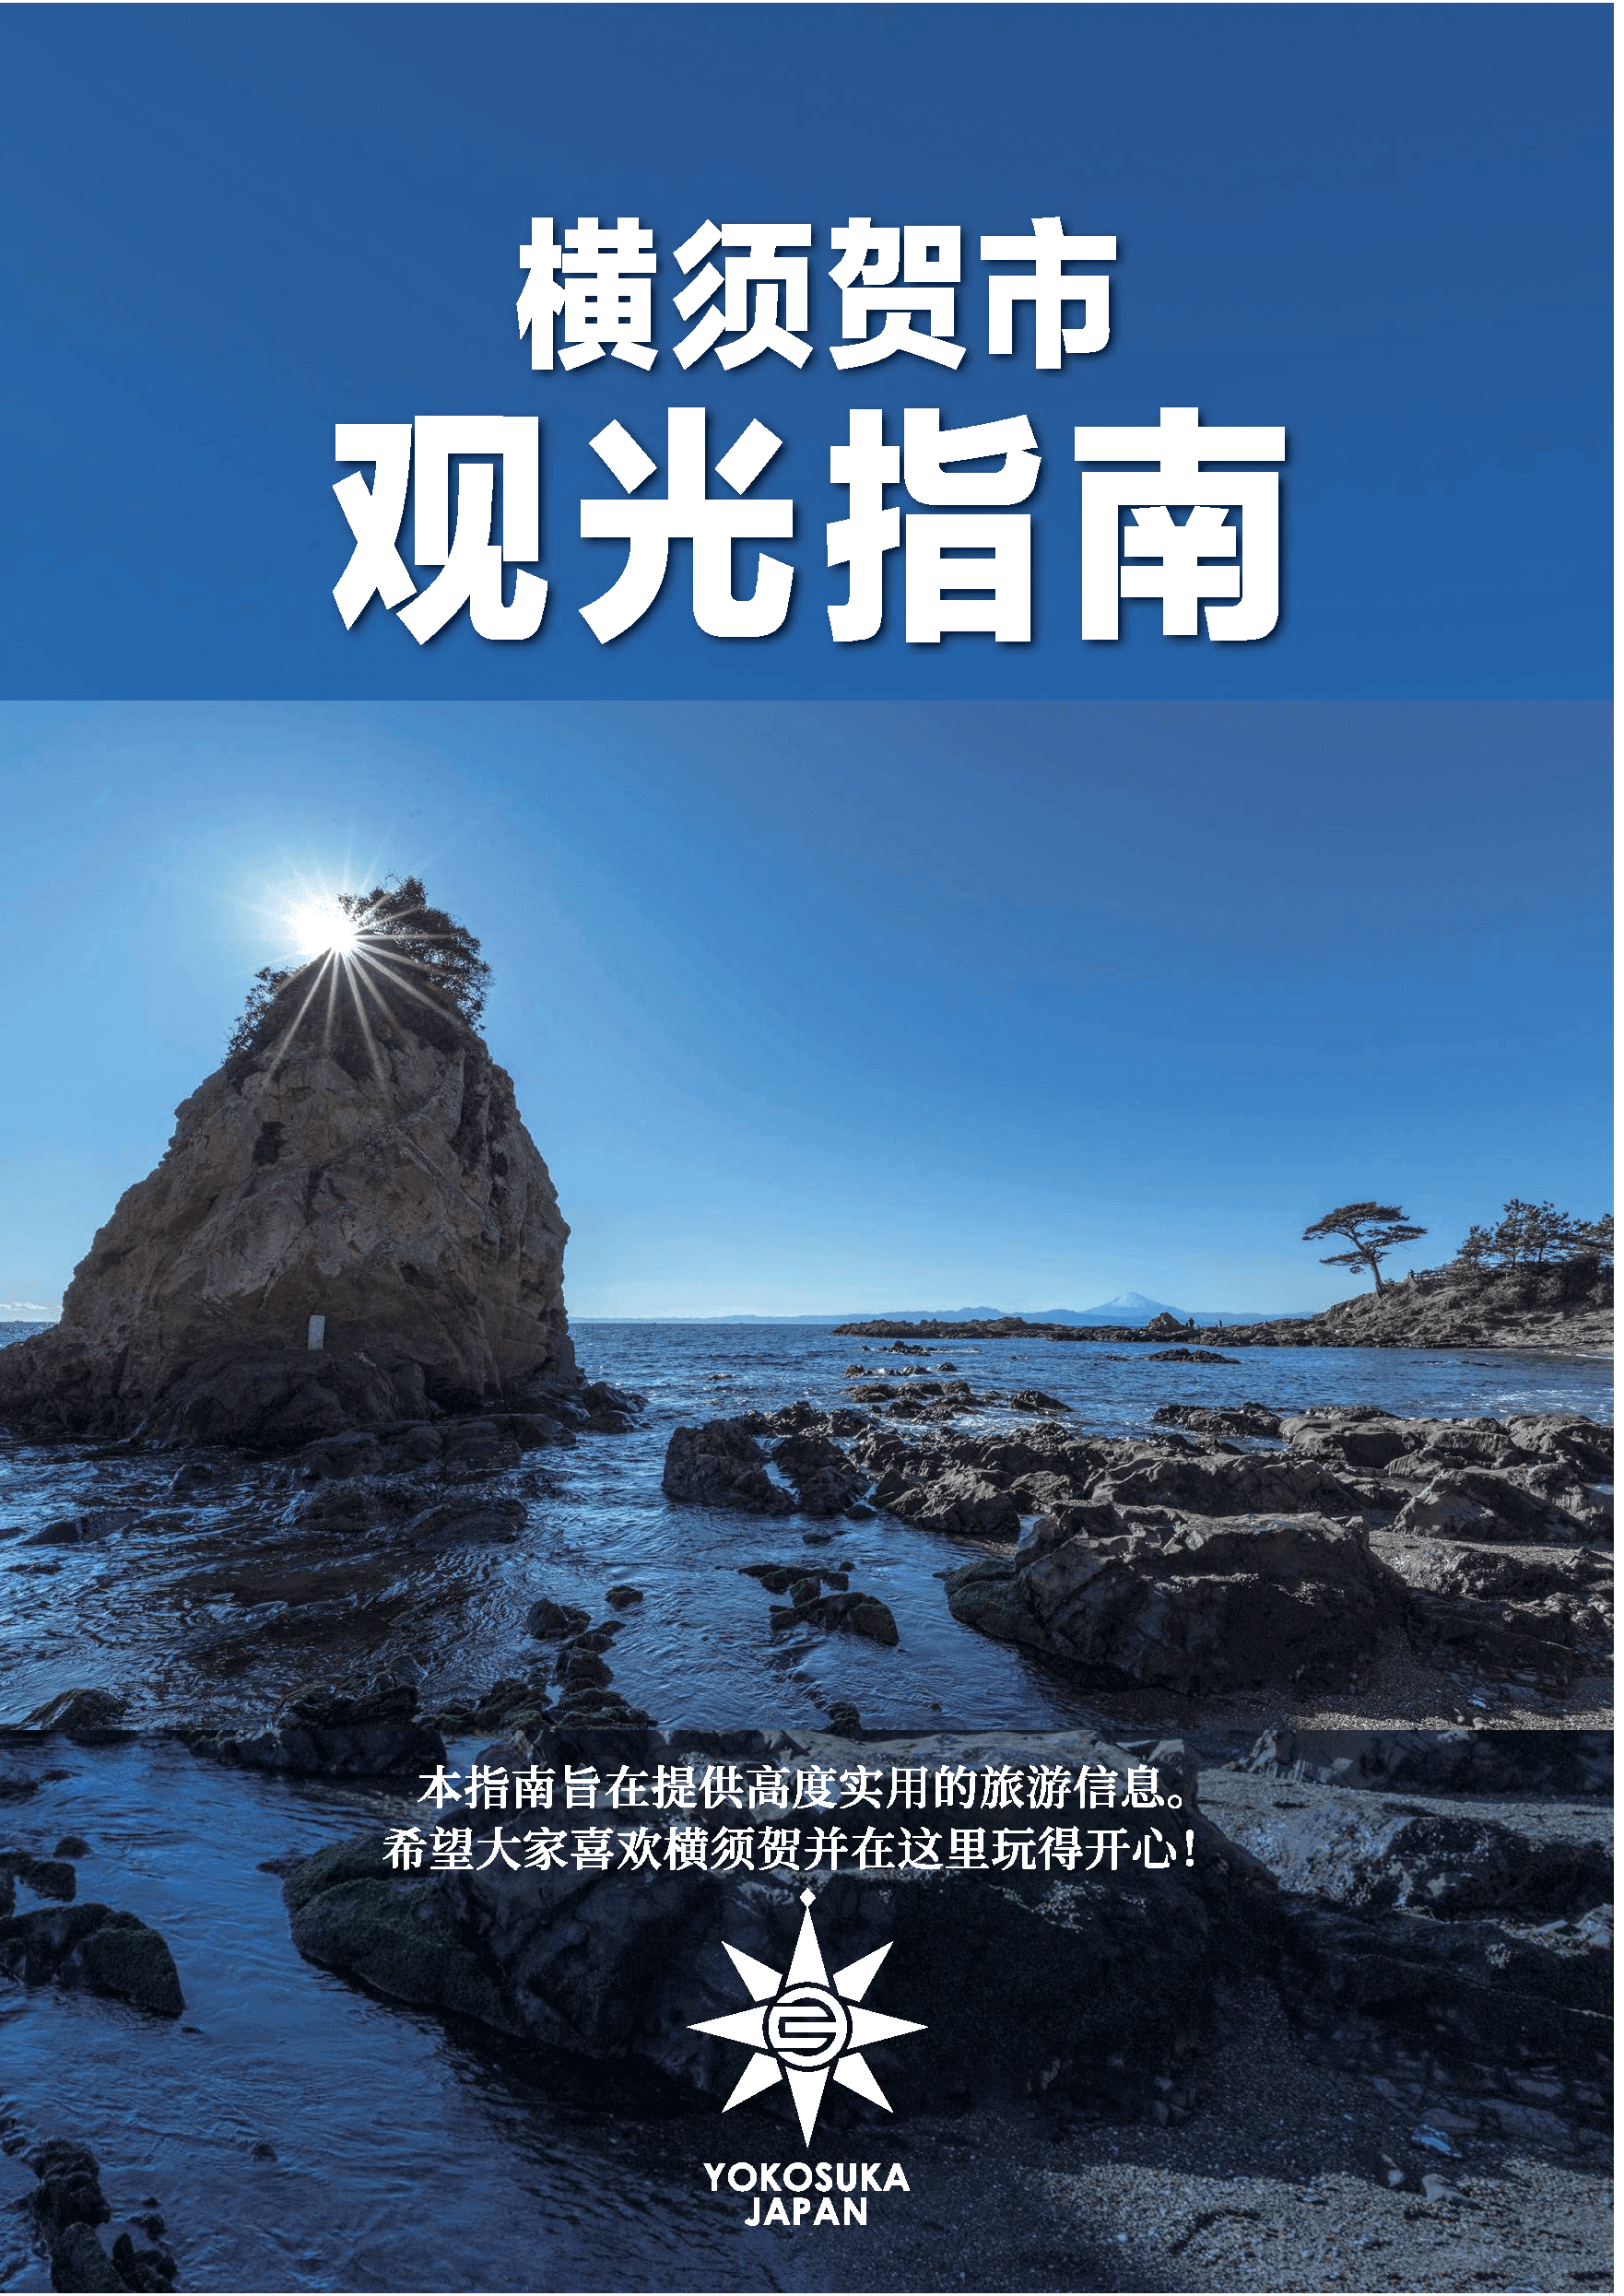 Tourism Yokosuka Travel Guide -YOKOSUKA GUIDE MAP-中国語(簡体字)版